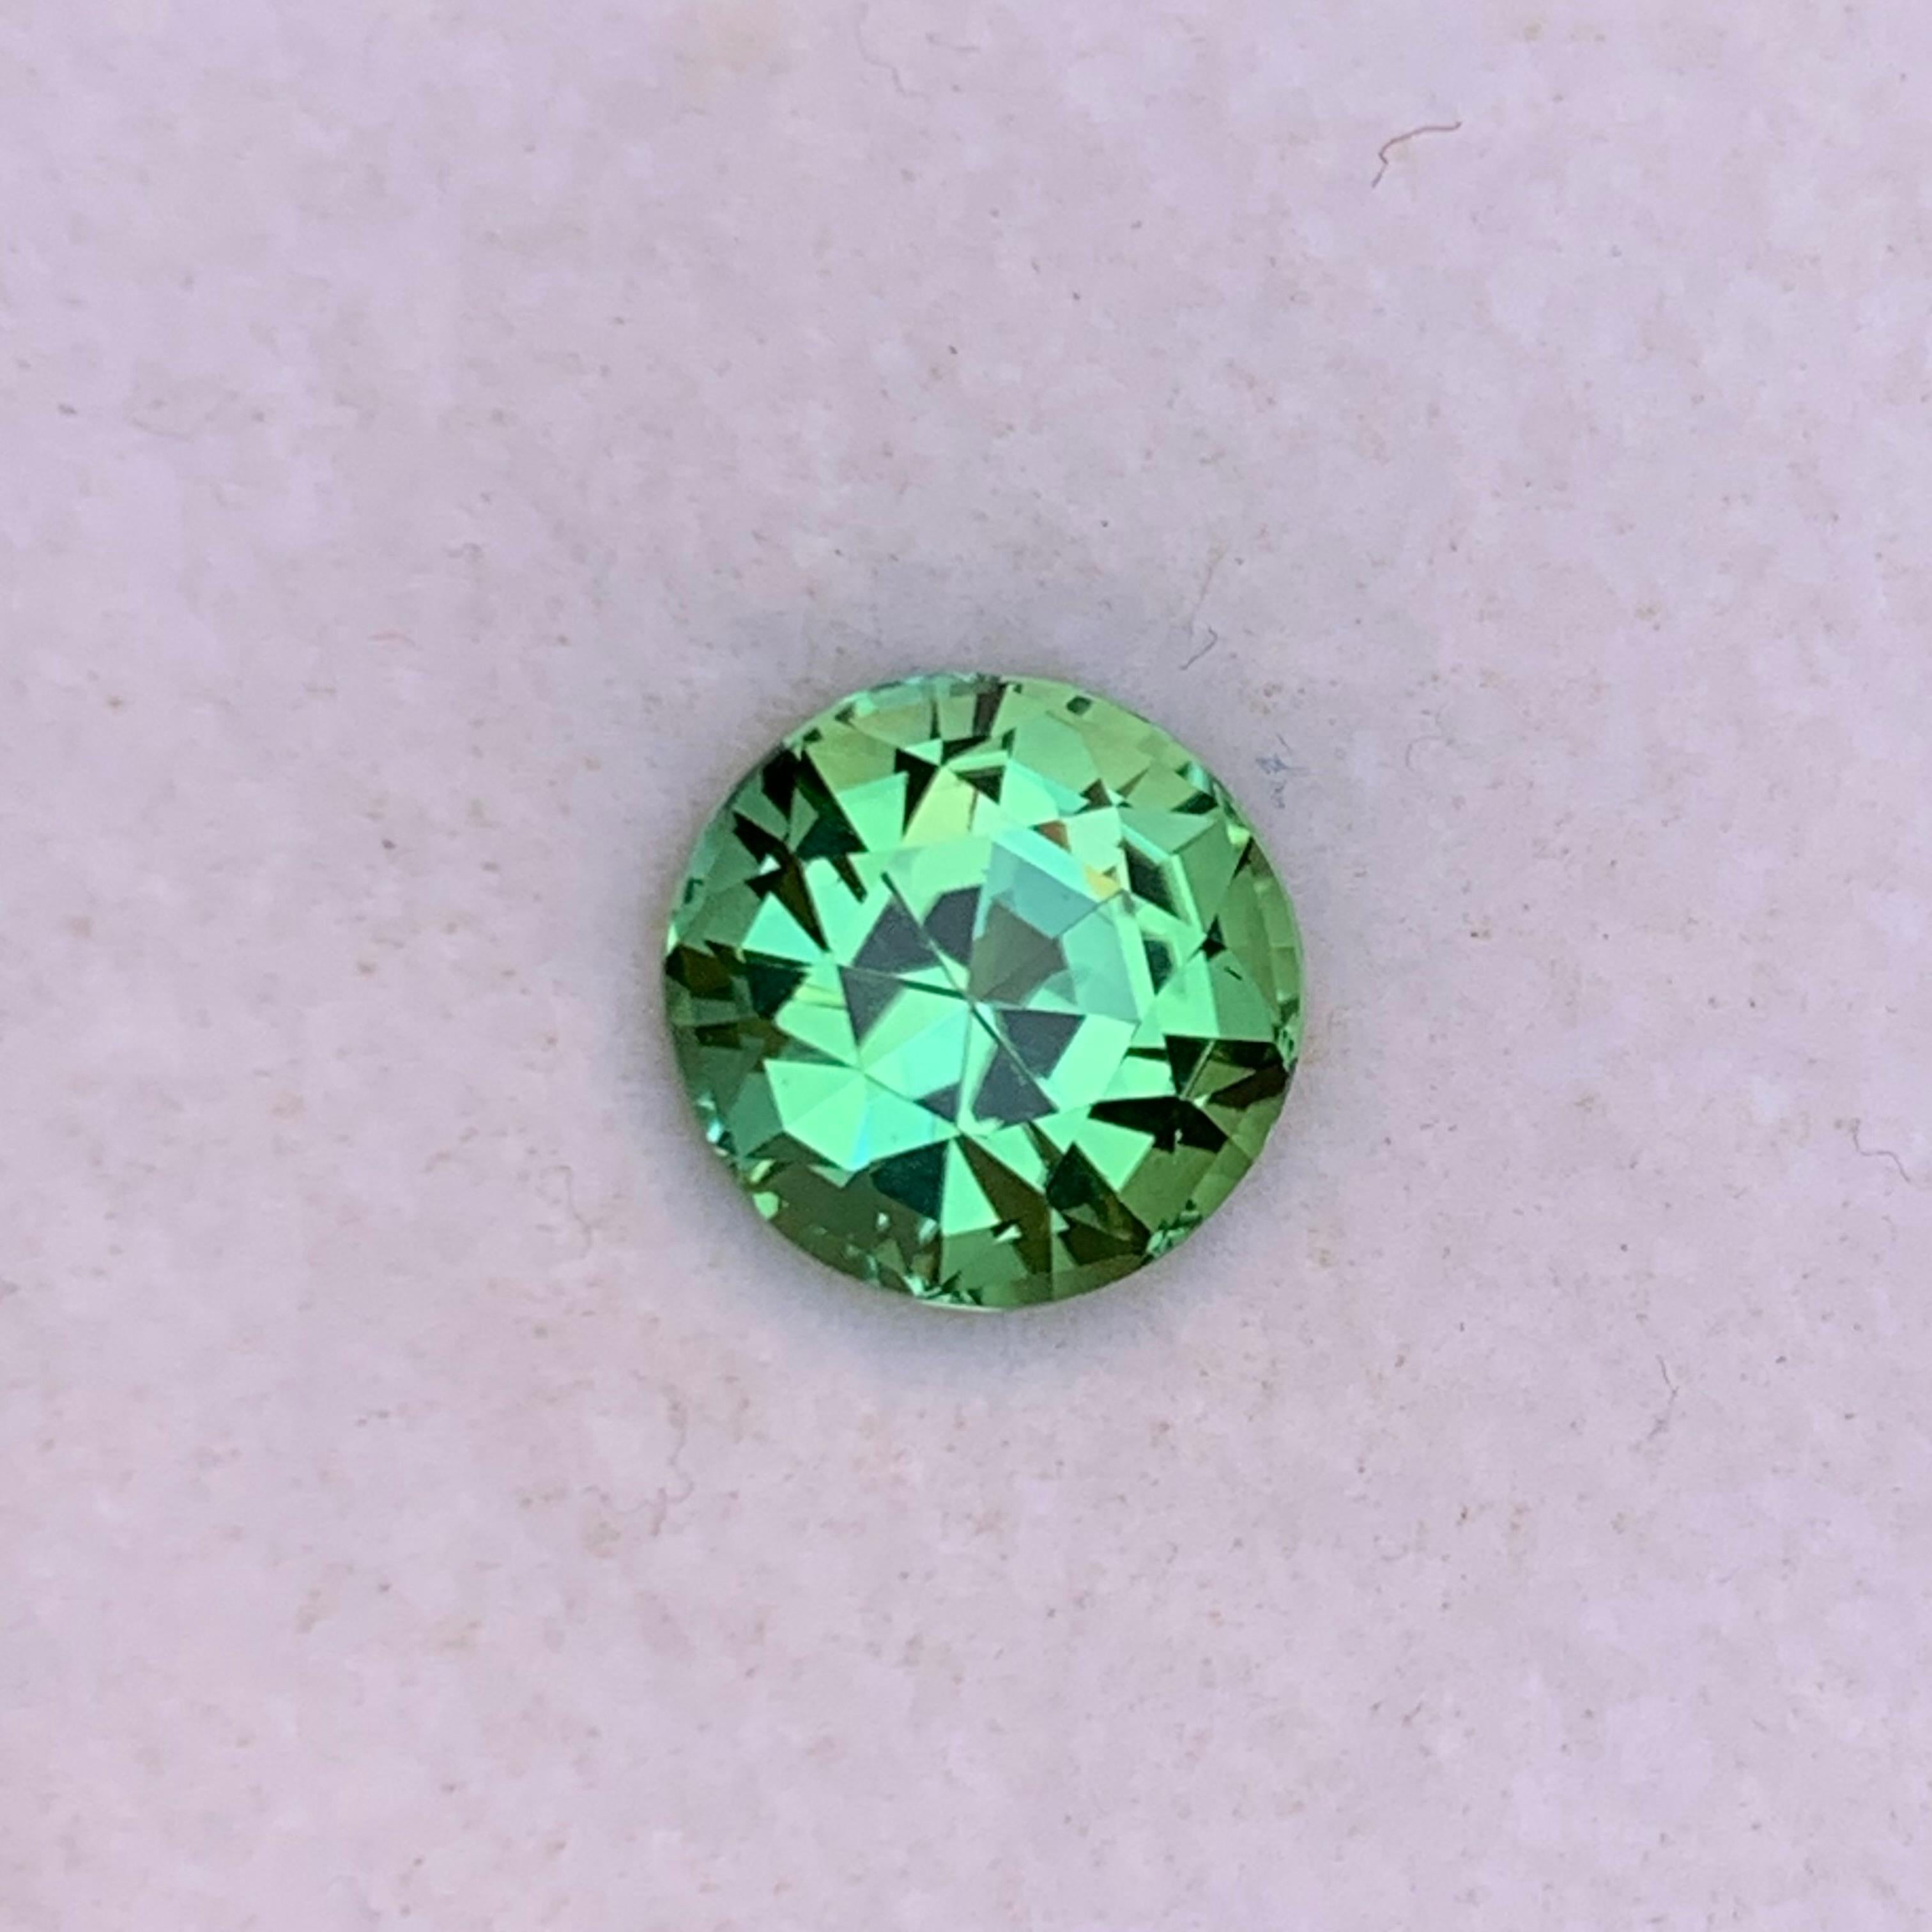 Rare Mint Green Natural Tourmaline Loose Gemstone, 2.70 Ct Round Brilliant Cut  For Sale 4